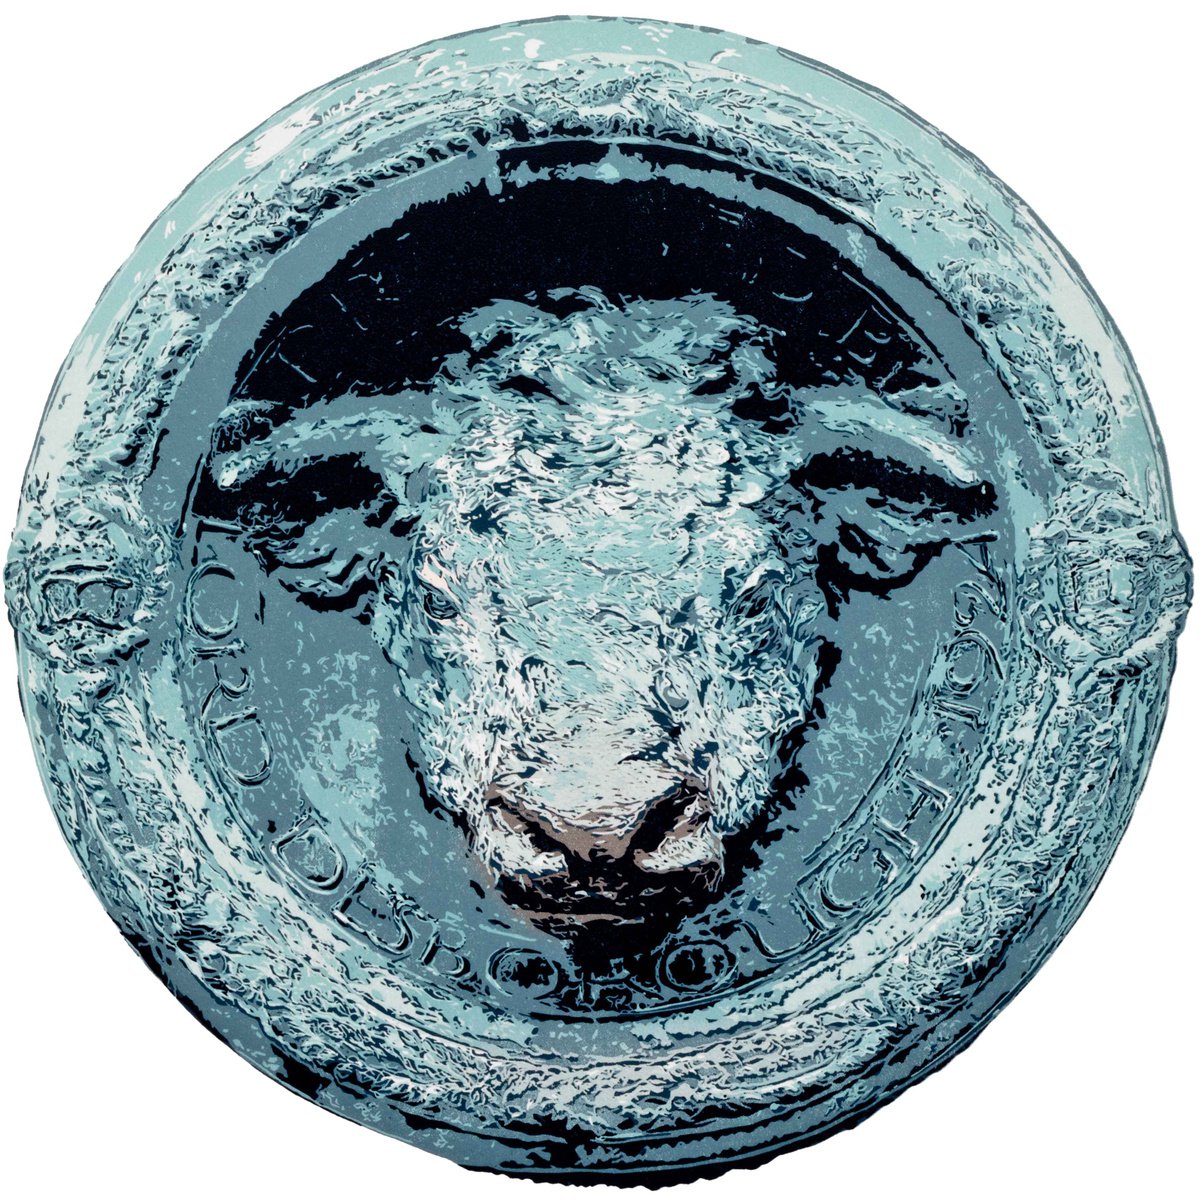 The Bull of Iffley by Wayne Longhurst